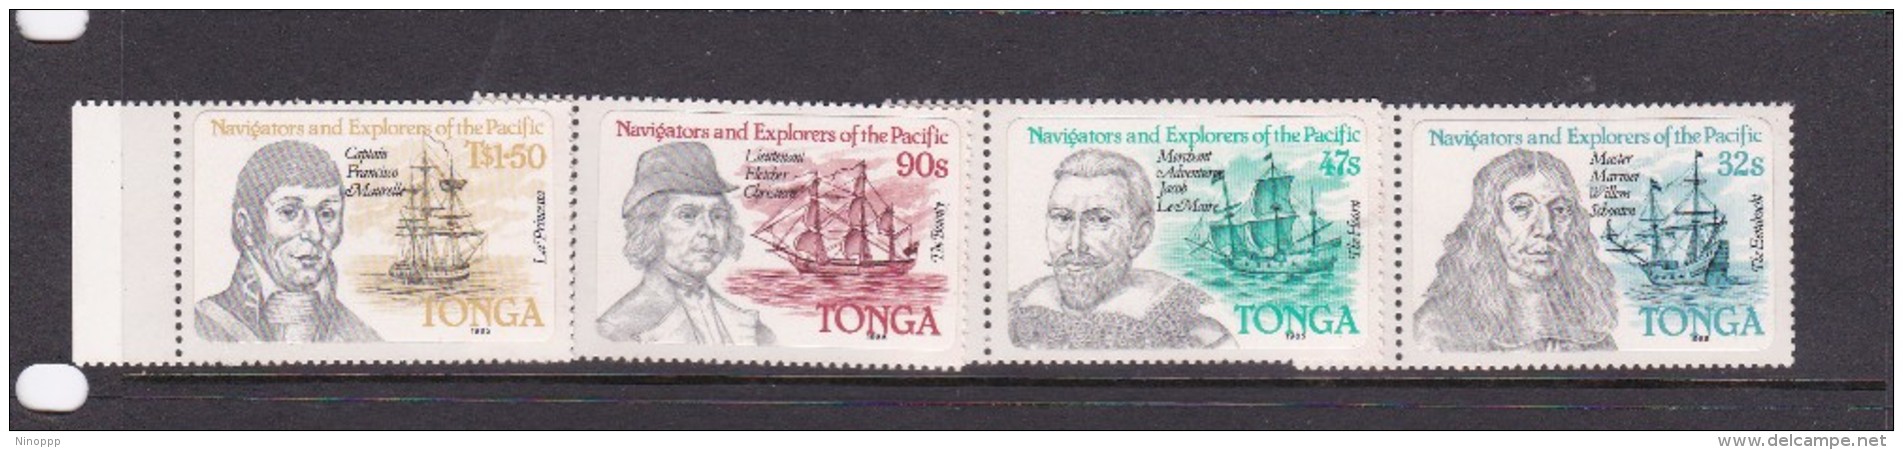 Tonga SG 896-899 1985 Navigators And Explores  MNH - Tonga (1970-...)